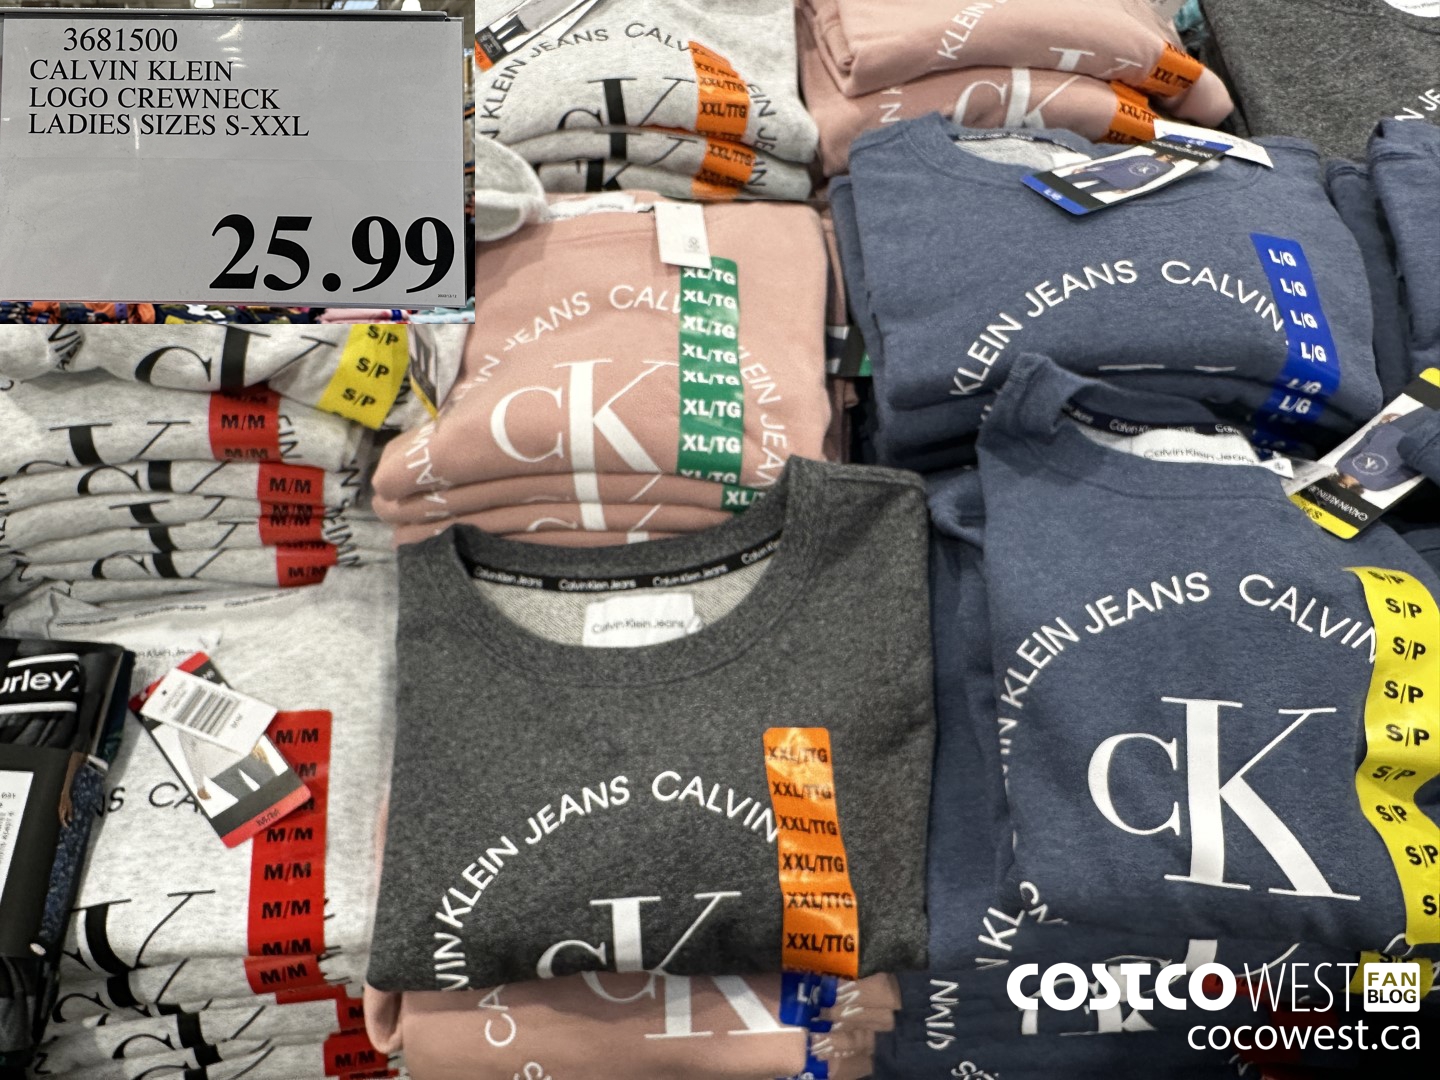 Costco Deals - ❤️Comfy @calvinklein ladies logo #hoodies only